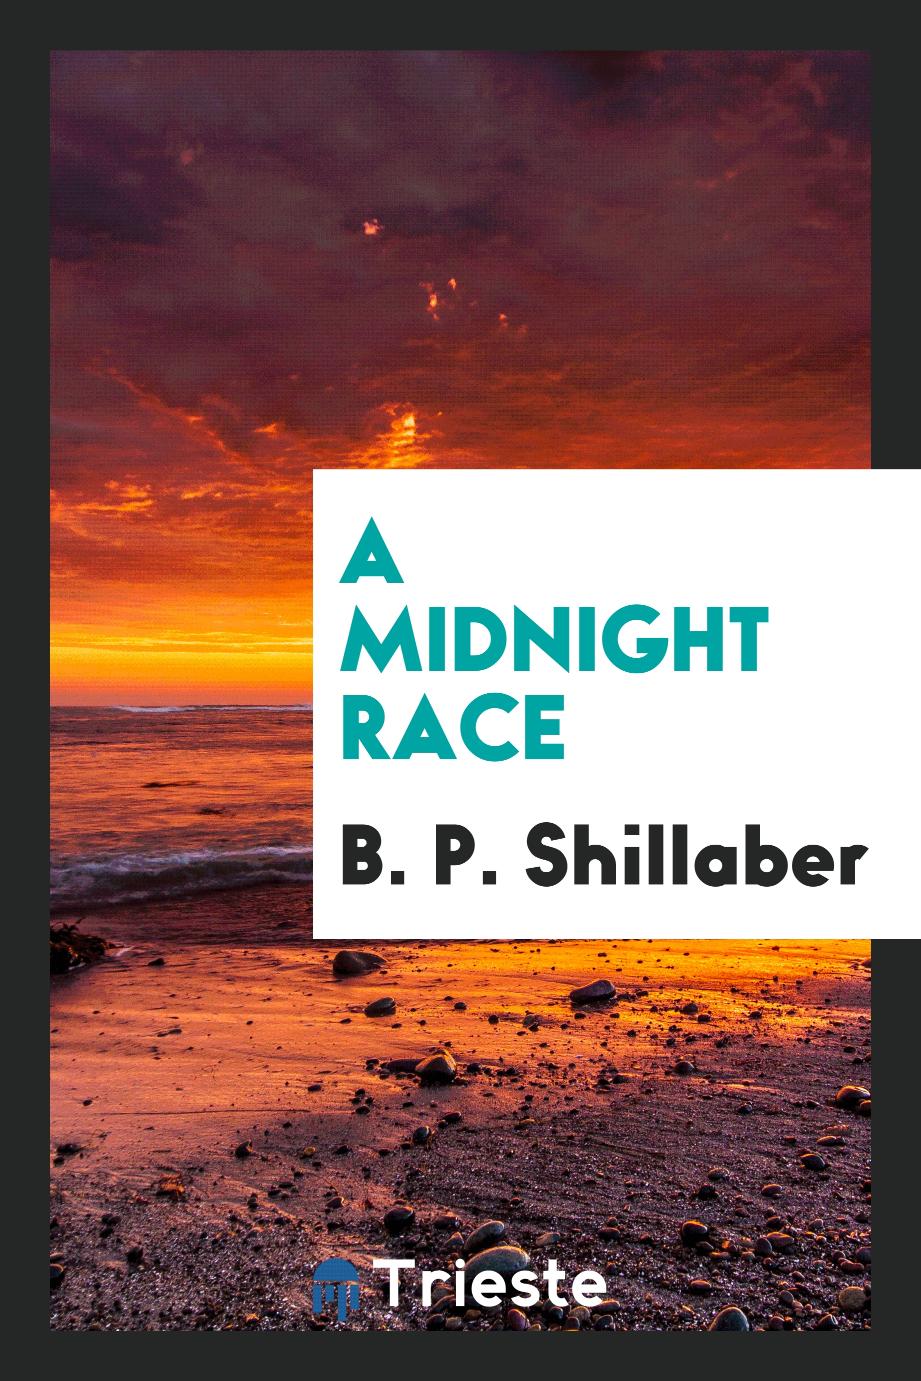 A midnight race